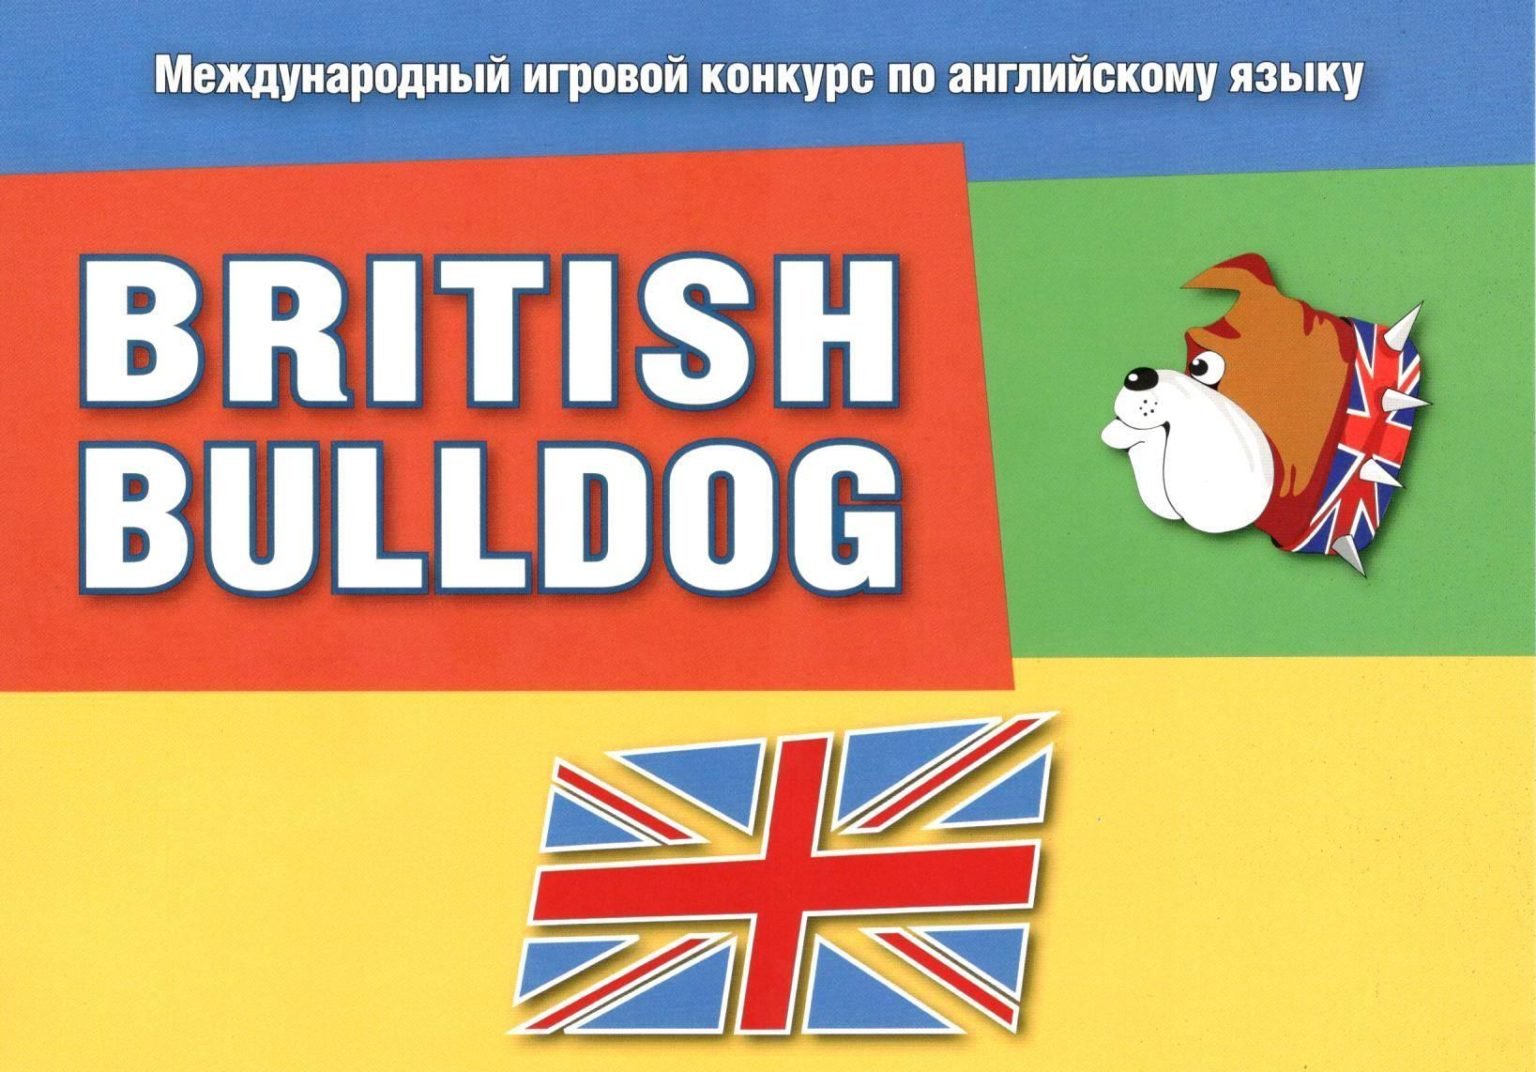 Бульдог конкурс по английскому языку. Международный игровой конкурс по английскому языку British Bulldog. Британский бульдог логотип. Британский бульдог 2022. Британский бульдог конкурс.